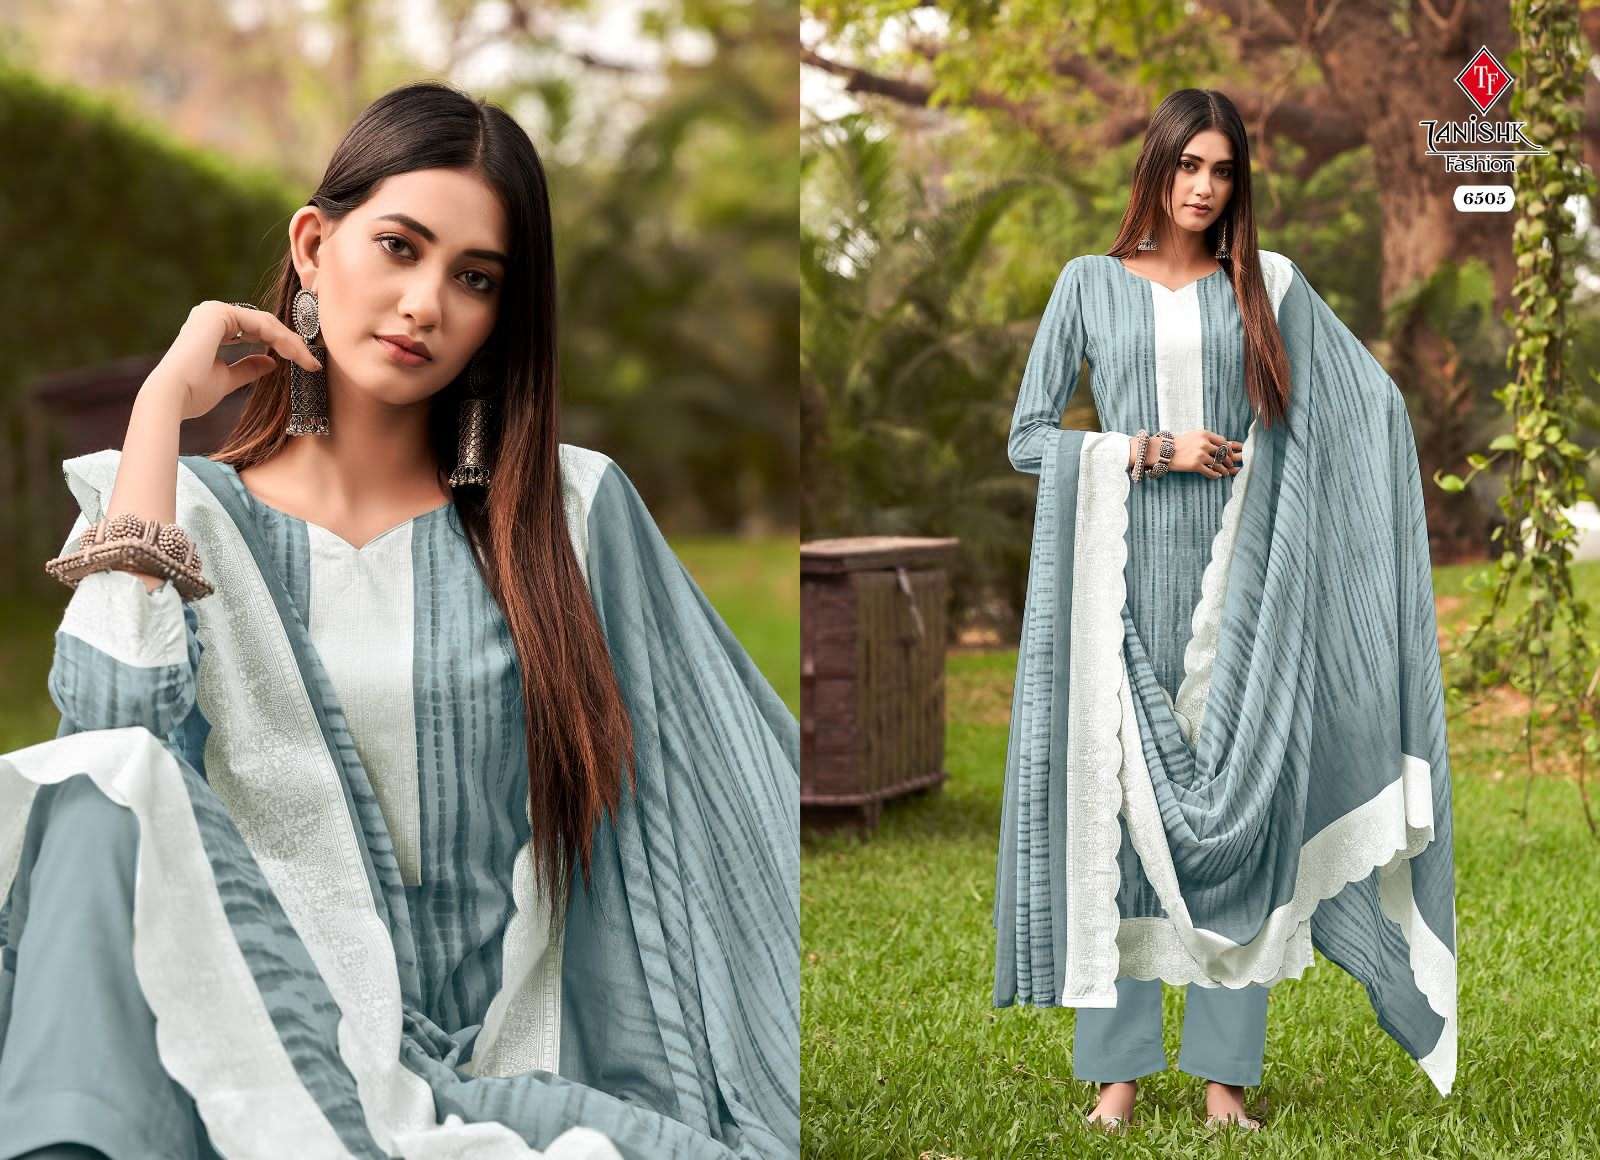 tanishk fashion by firdous vol 2 6501-6508 series cotton printed exclusive salwar kameez online wholesaler surat